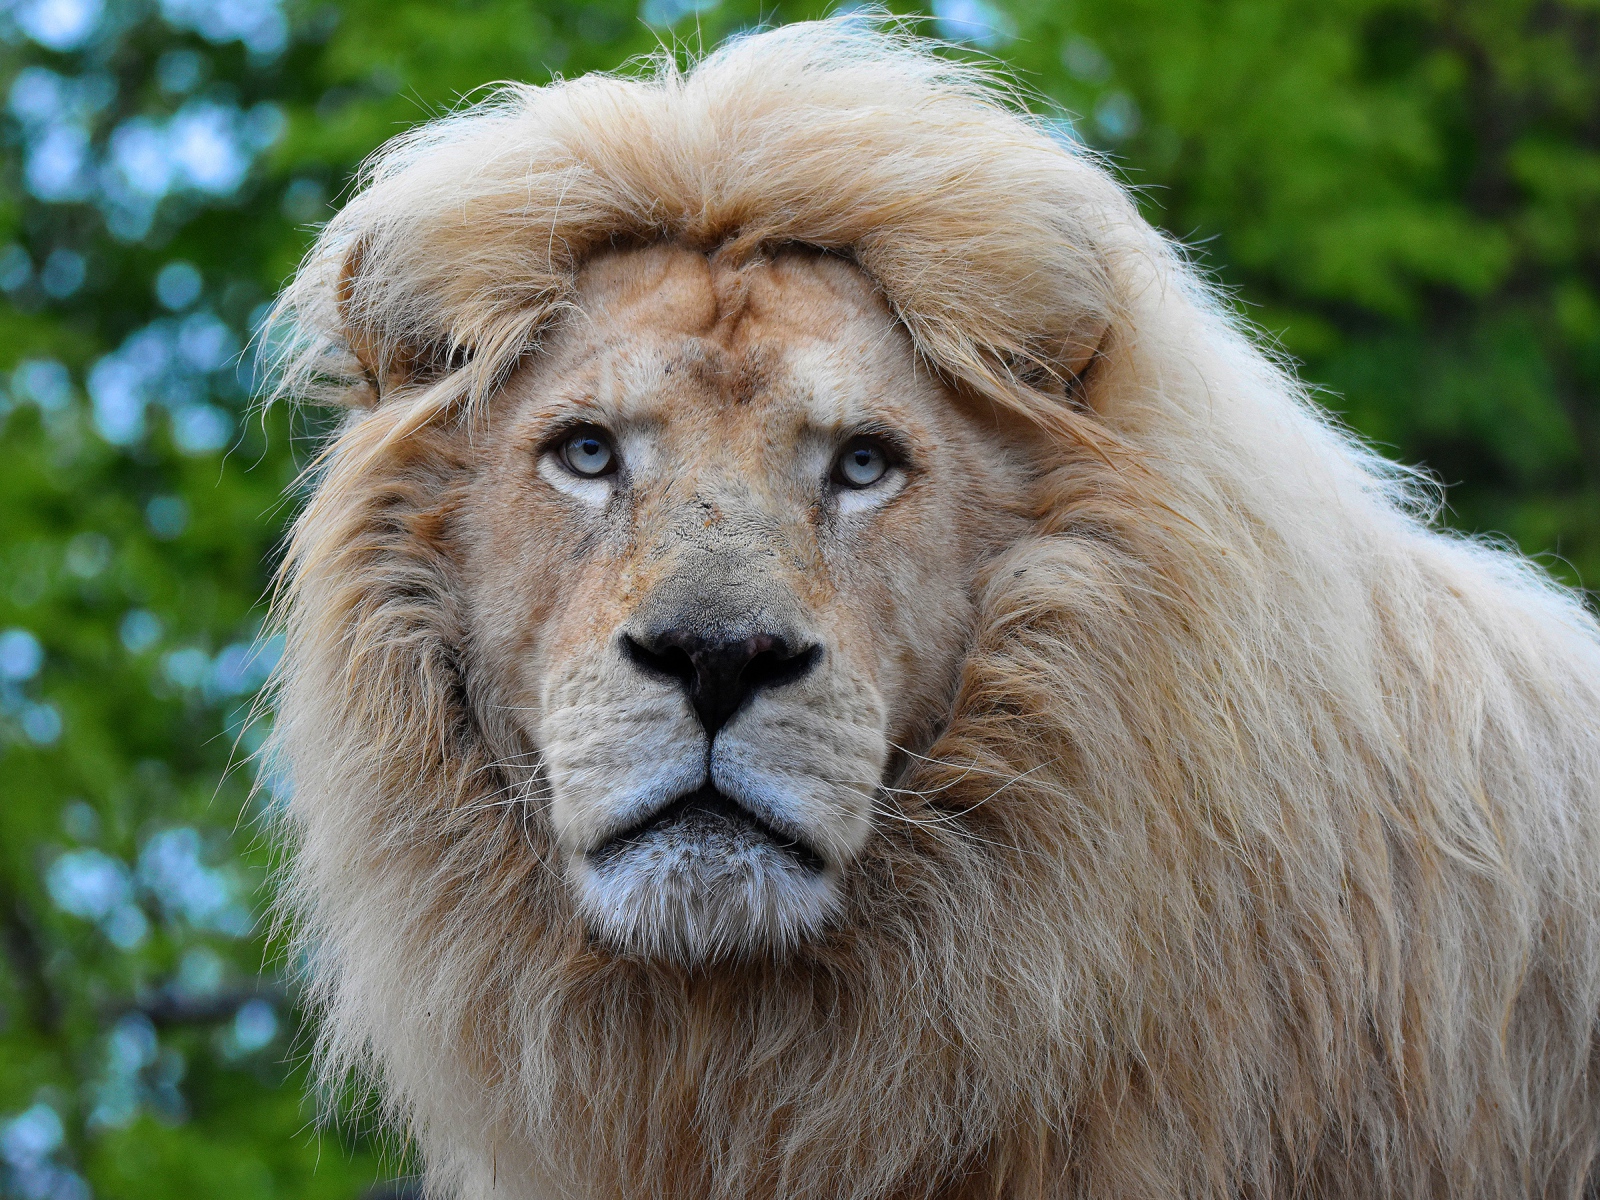 Big blue-eyed lion face close-up